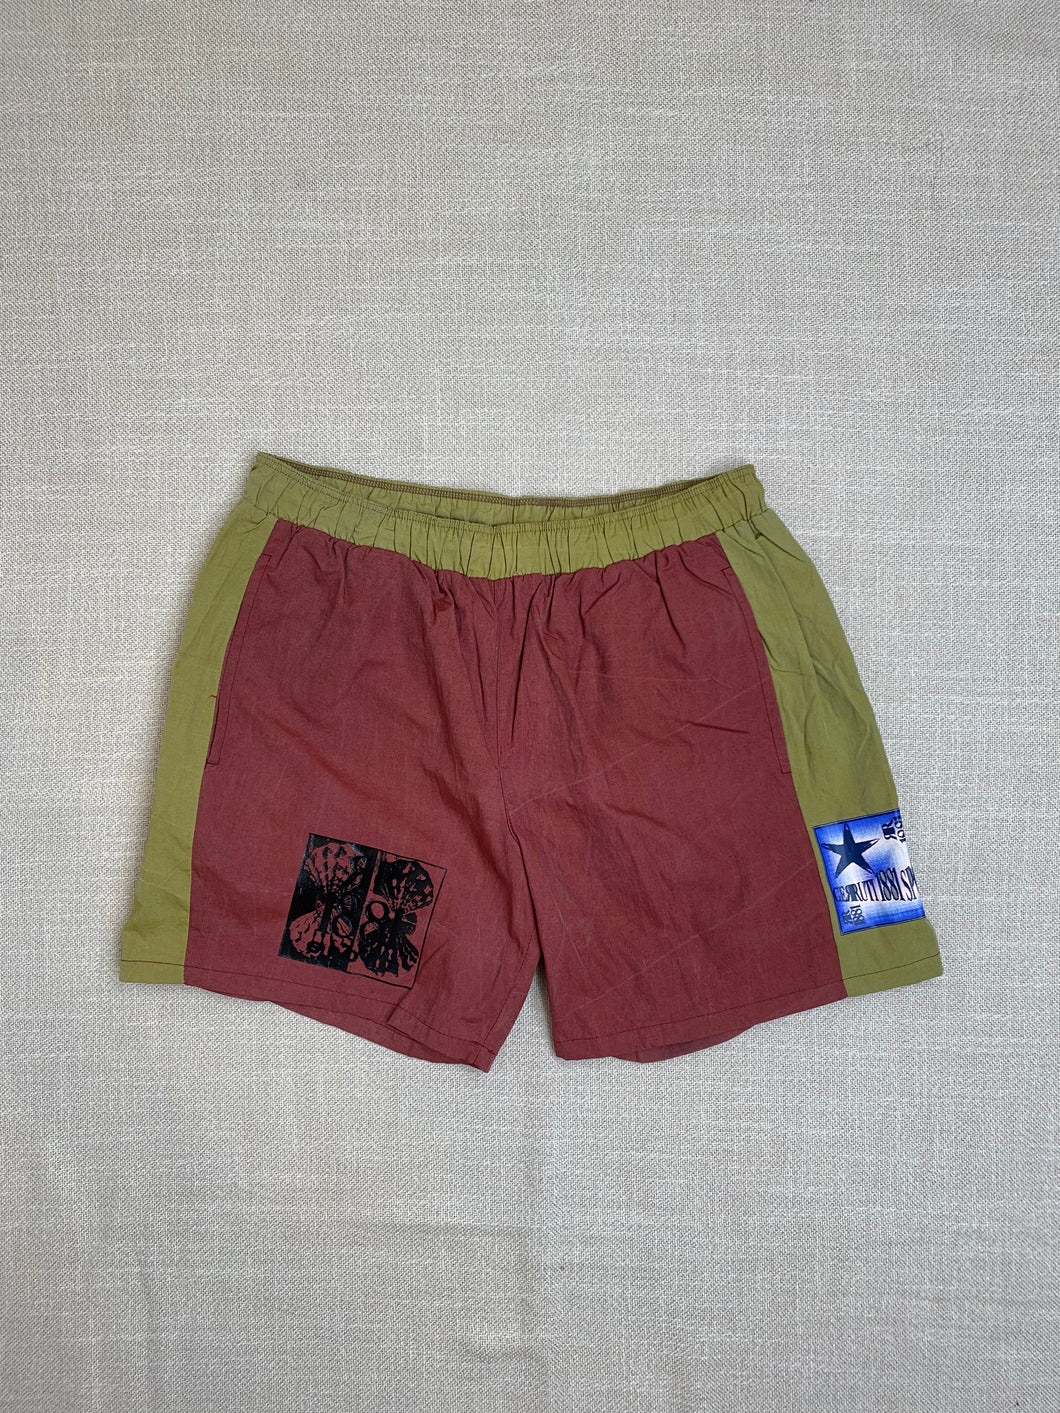 1980s Cerruti swimm Shorts red / Green